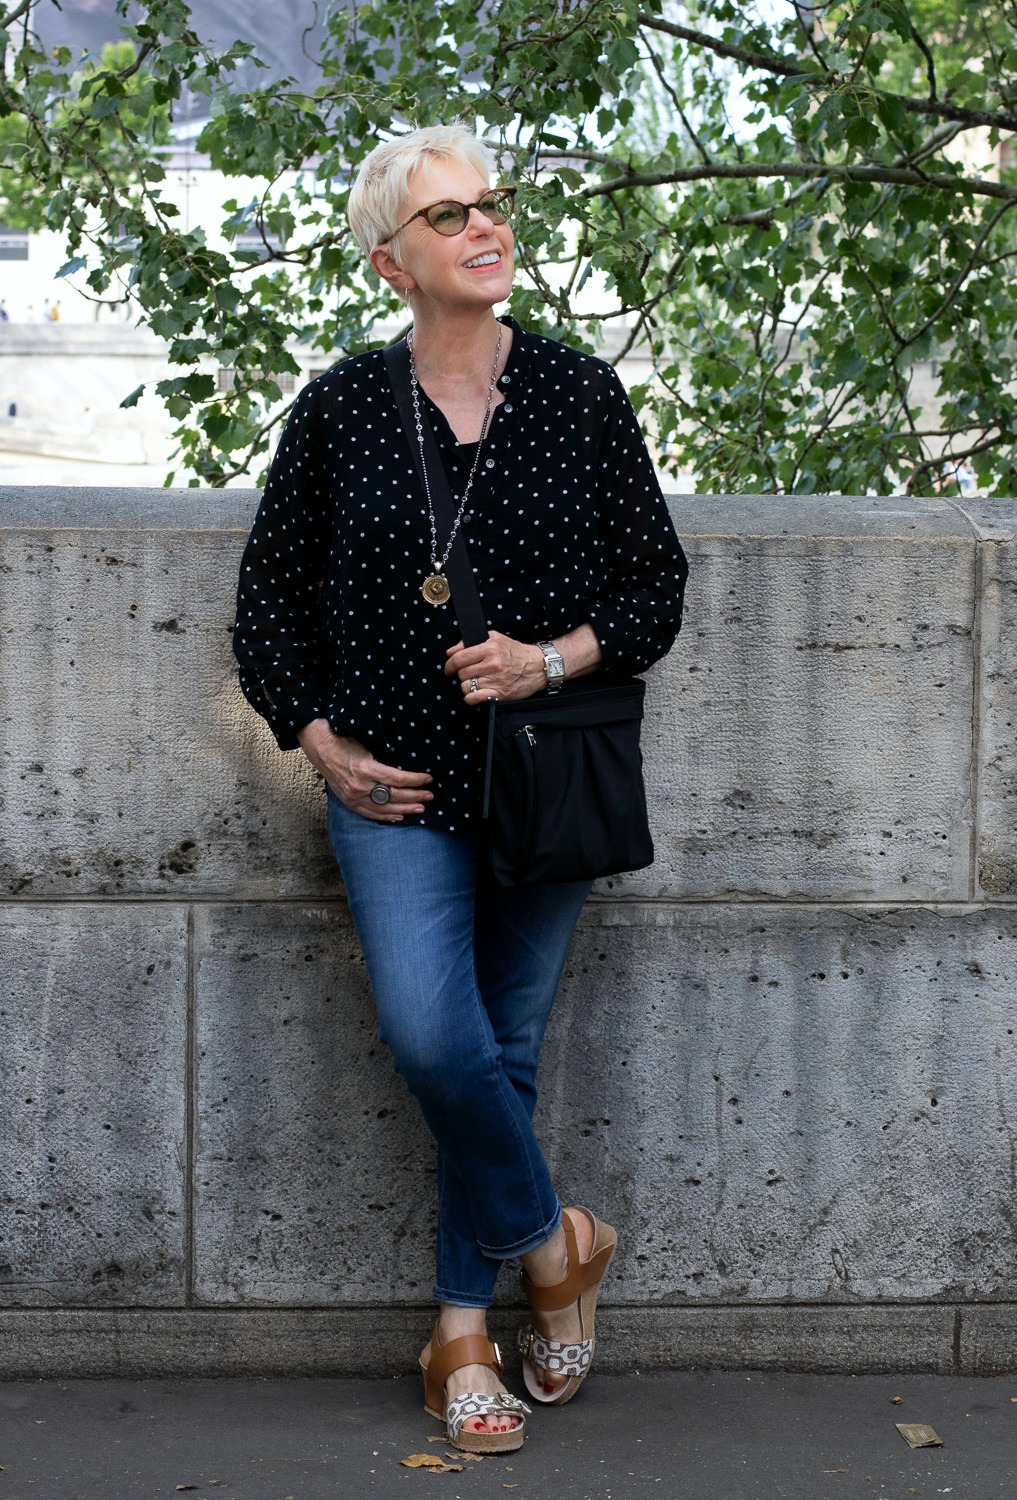 Style blogger Susan B. wears a polka dot top and jeans in Paris. Details at une femme d'un certain age.